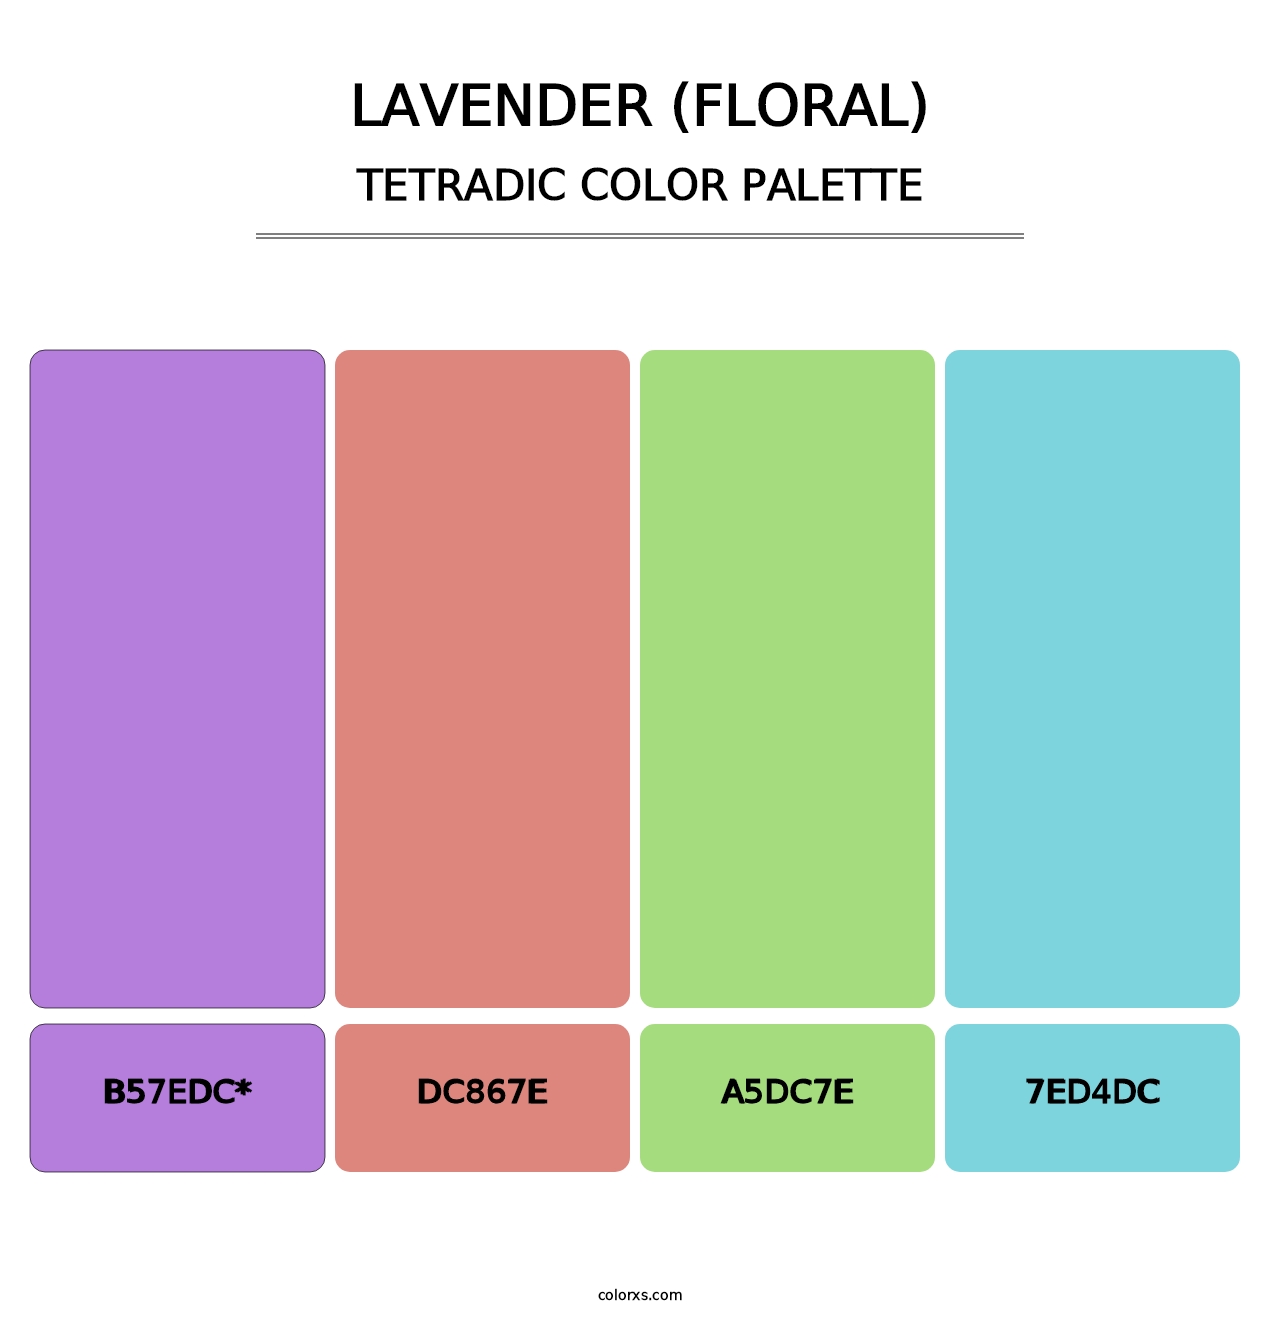 Lavender (Floral) - Tetradic Color Palette